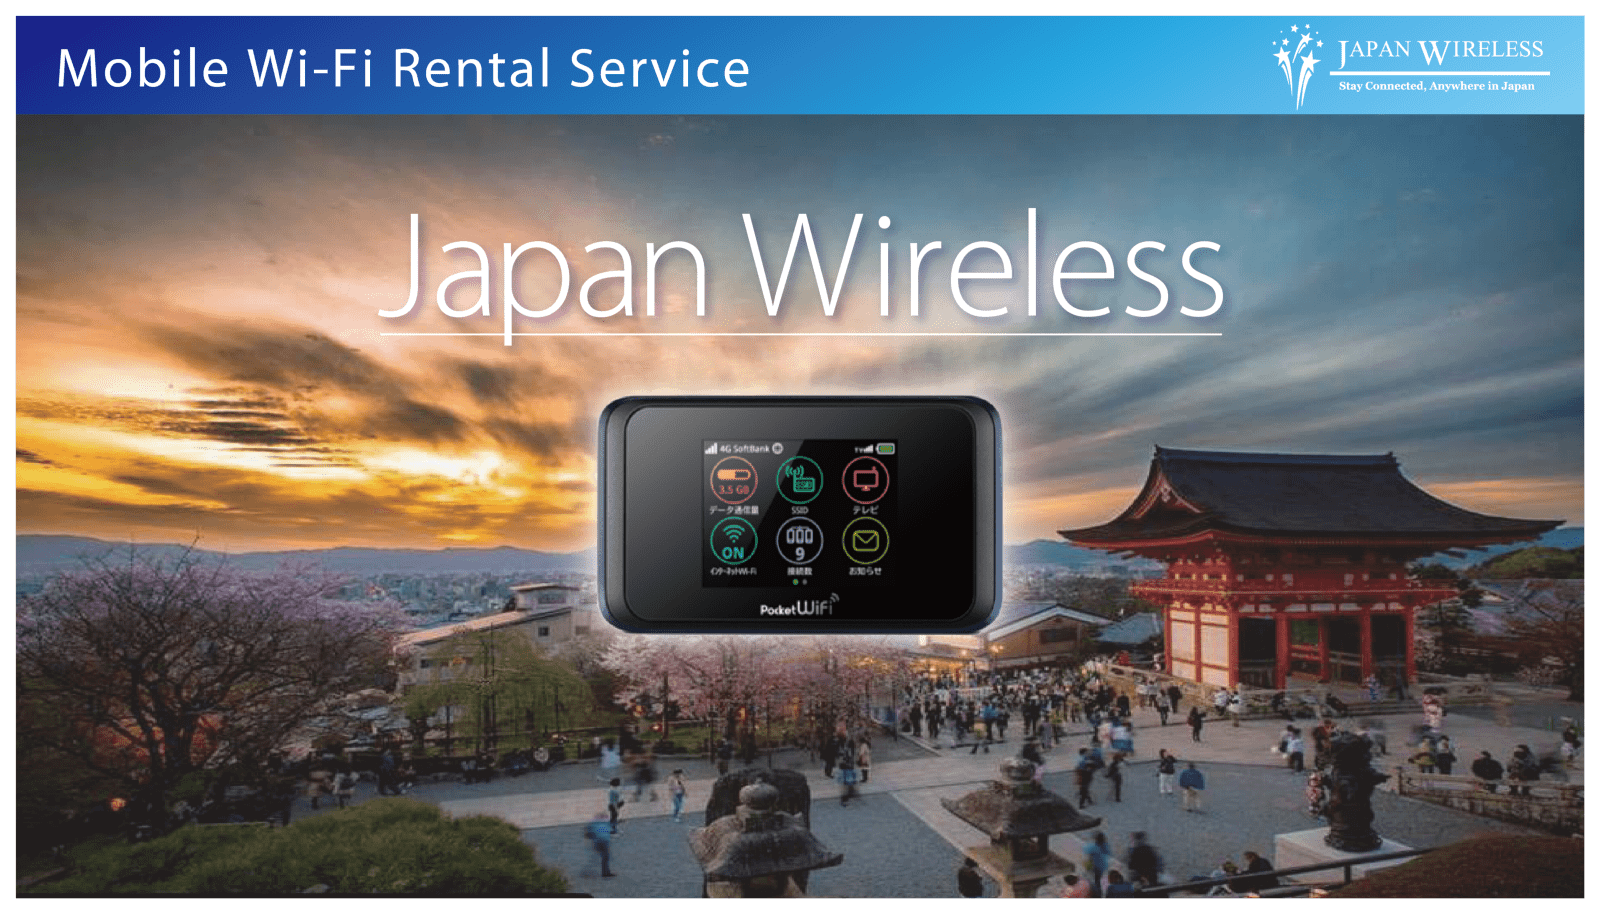 Rental Pocket WiFi by Japan Wireless